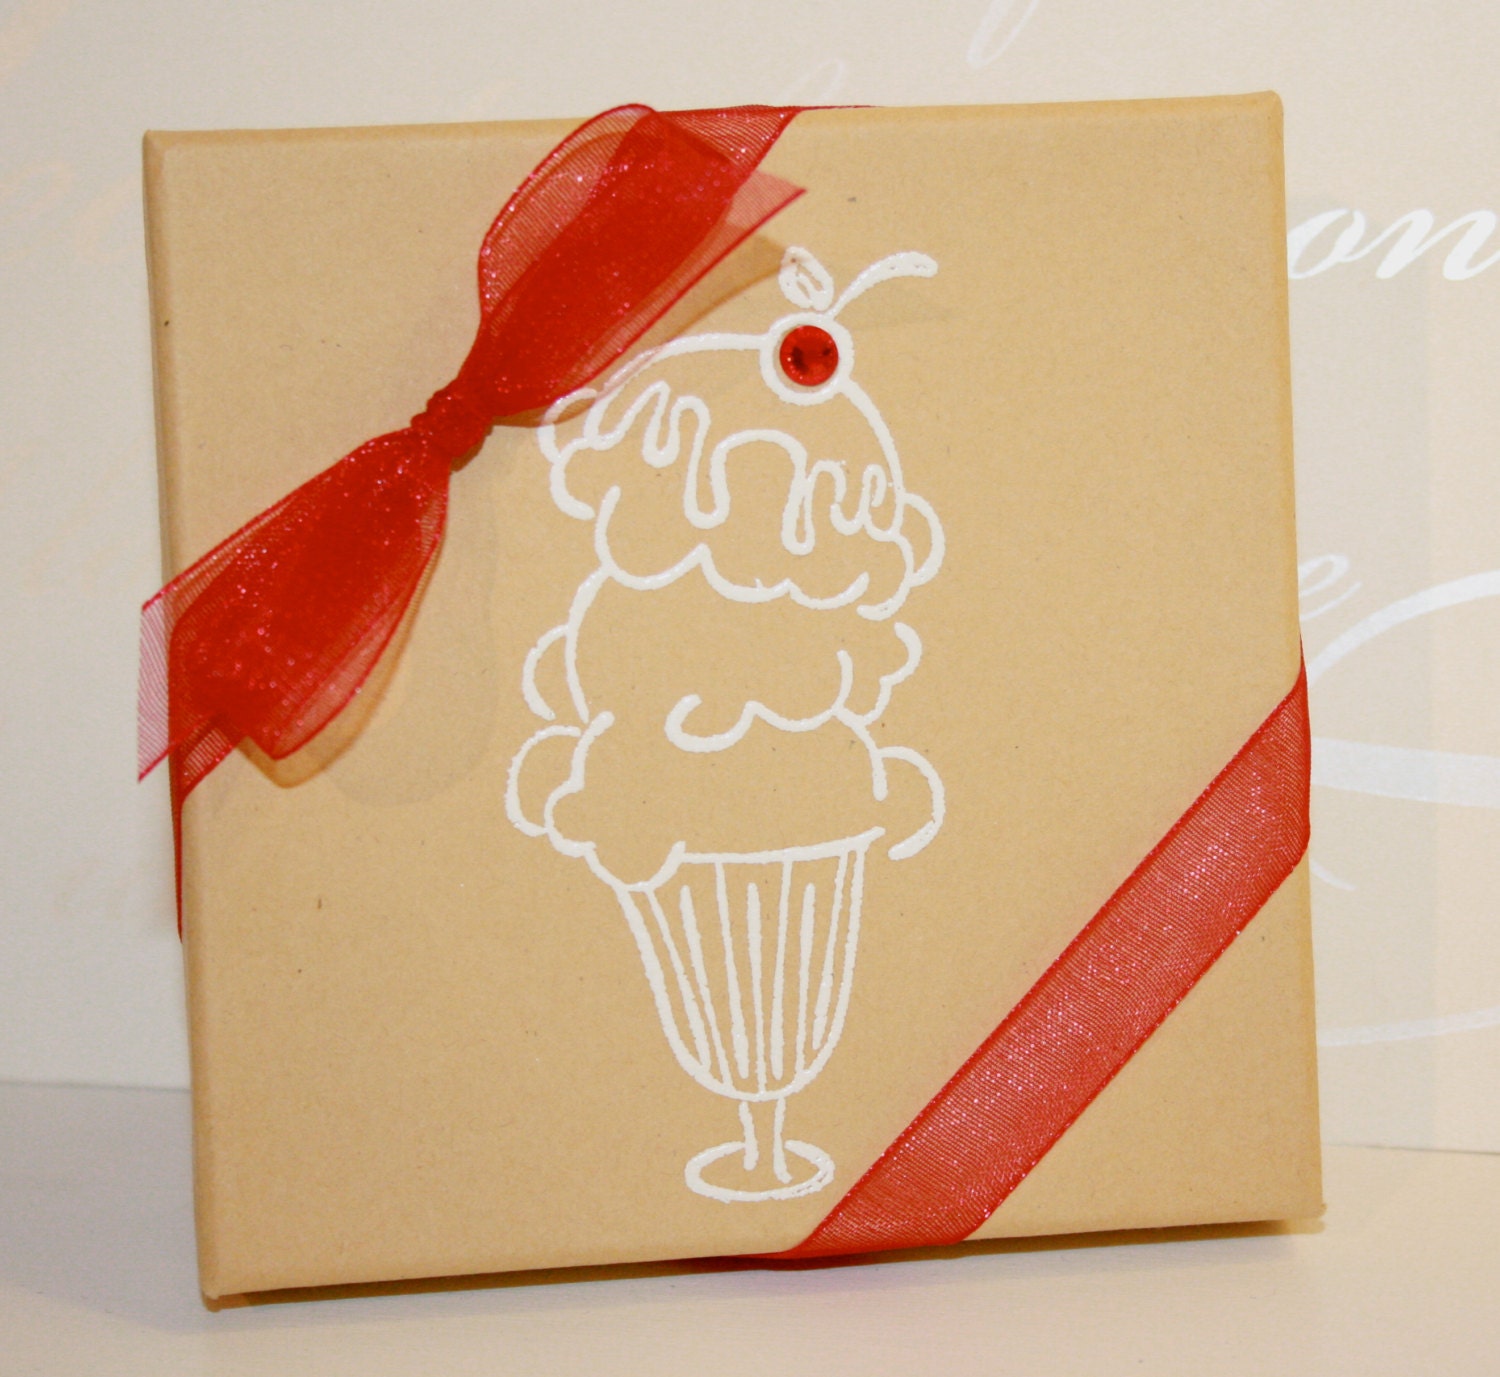 Ice Cream Sundae gift box Embossed Gift Boxes Paper gift